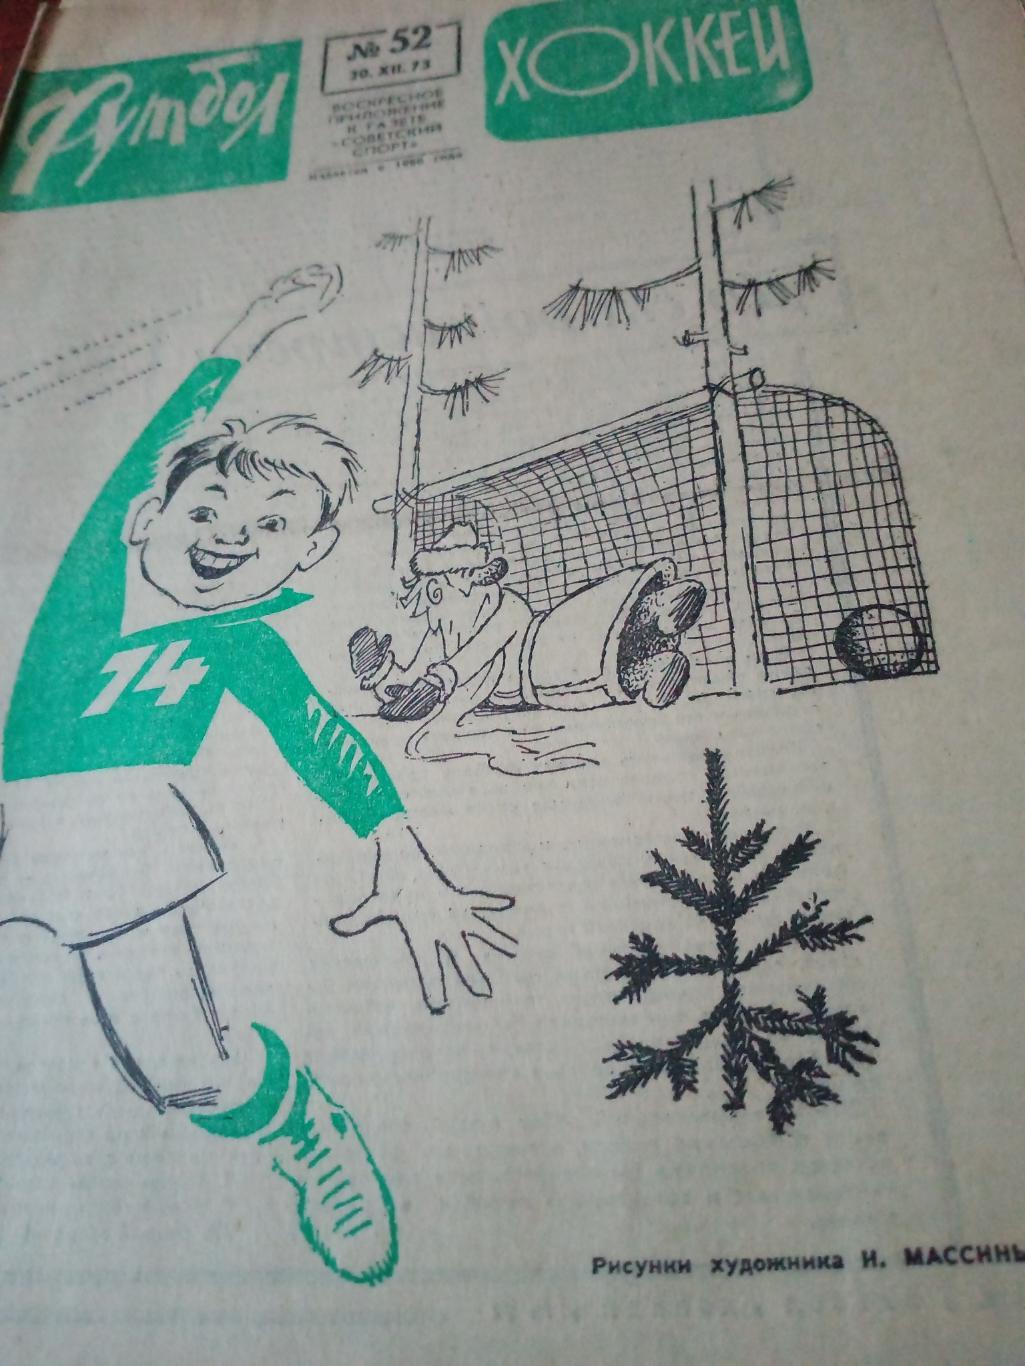 Футбол - Хоккей. 1973 год, №52